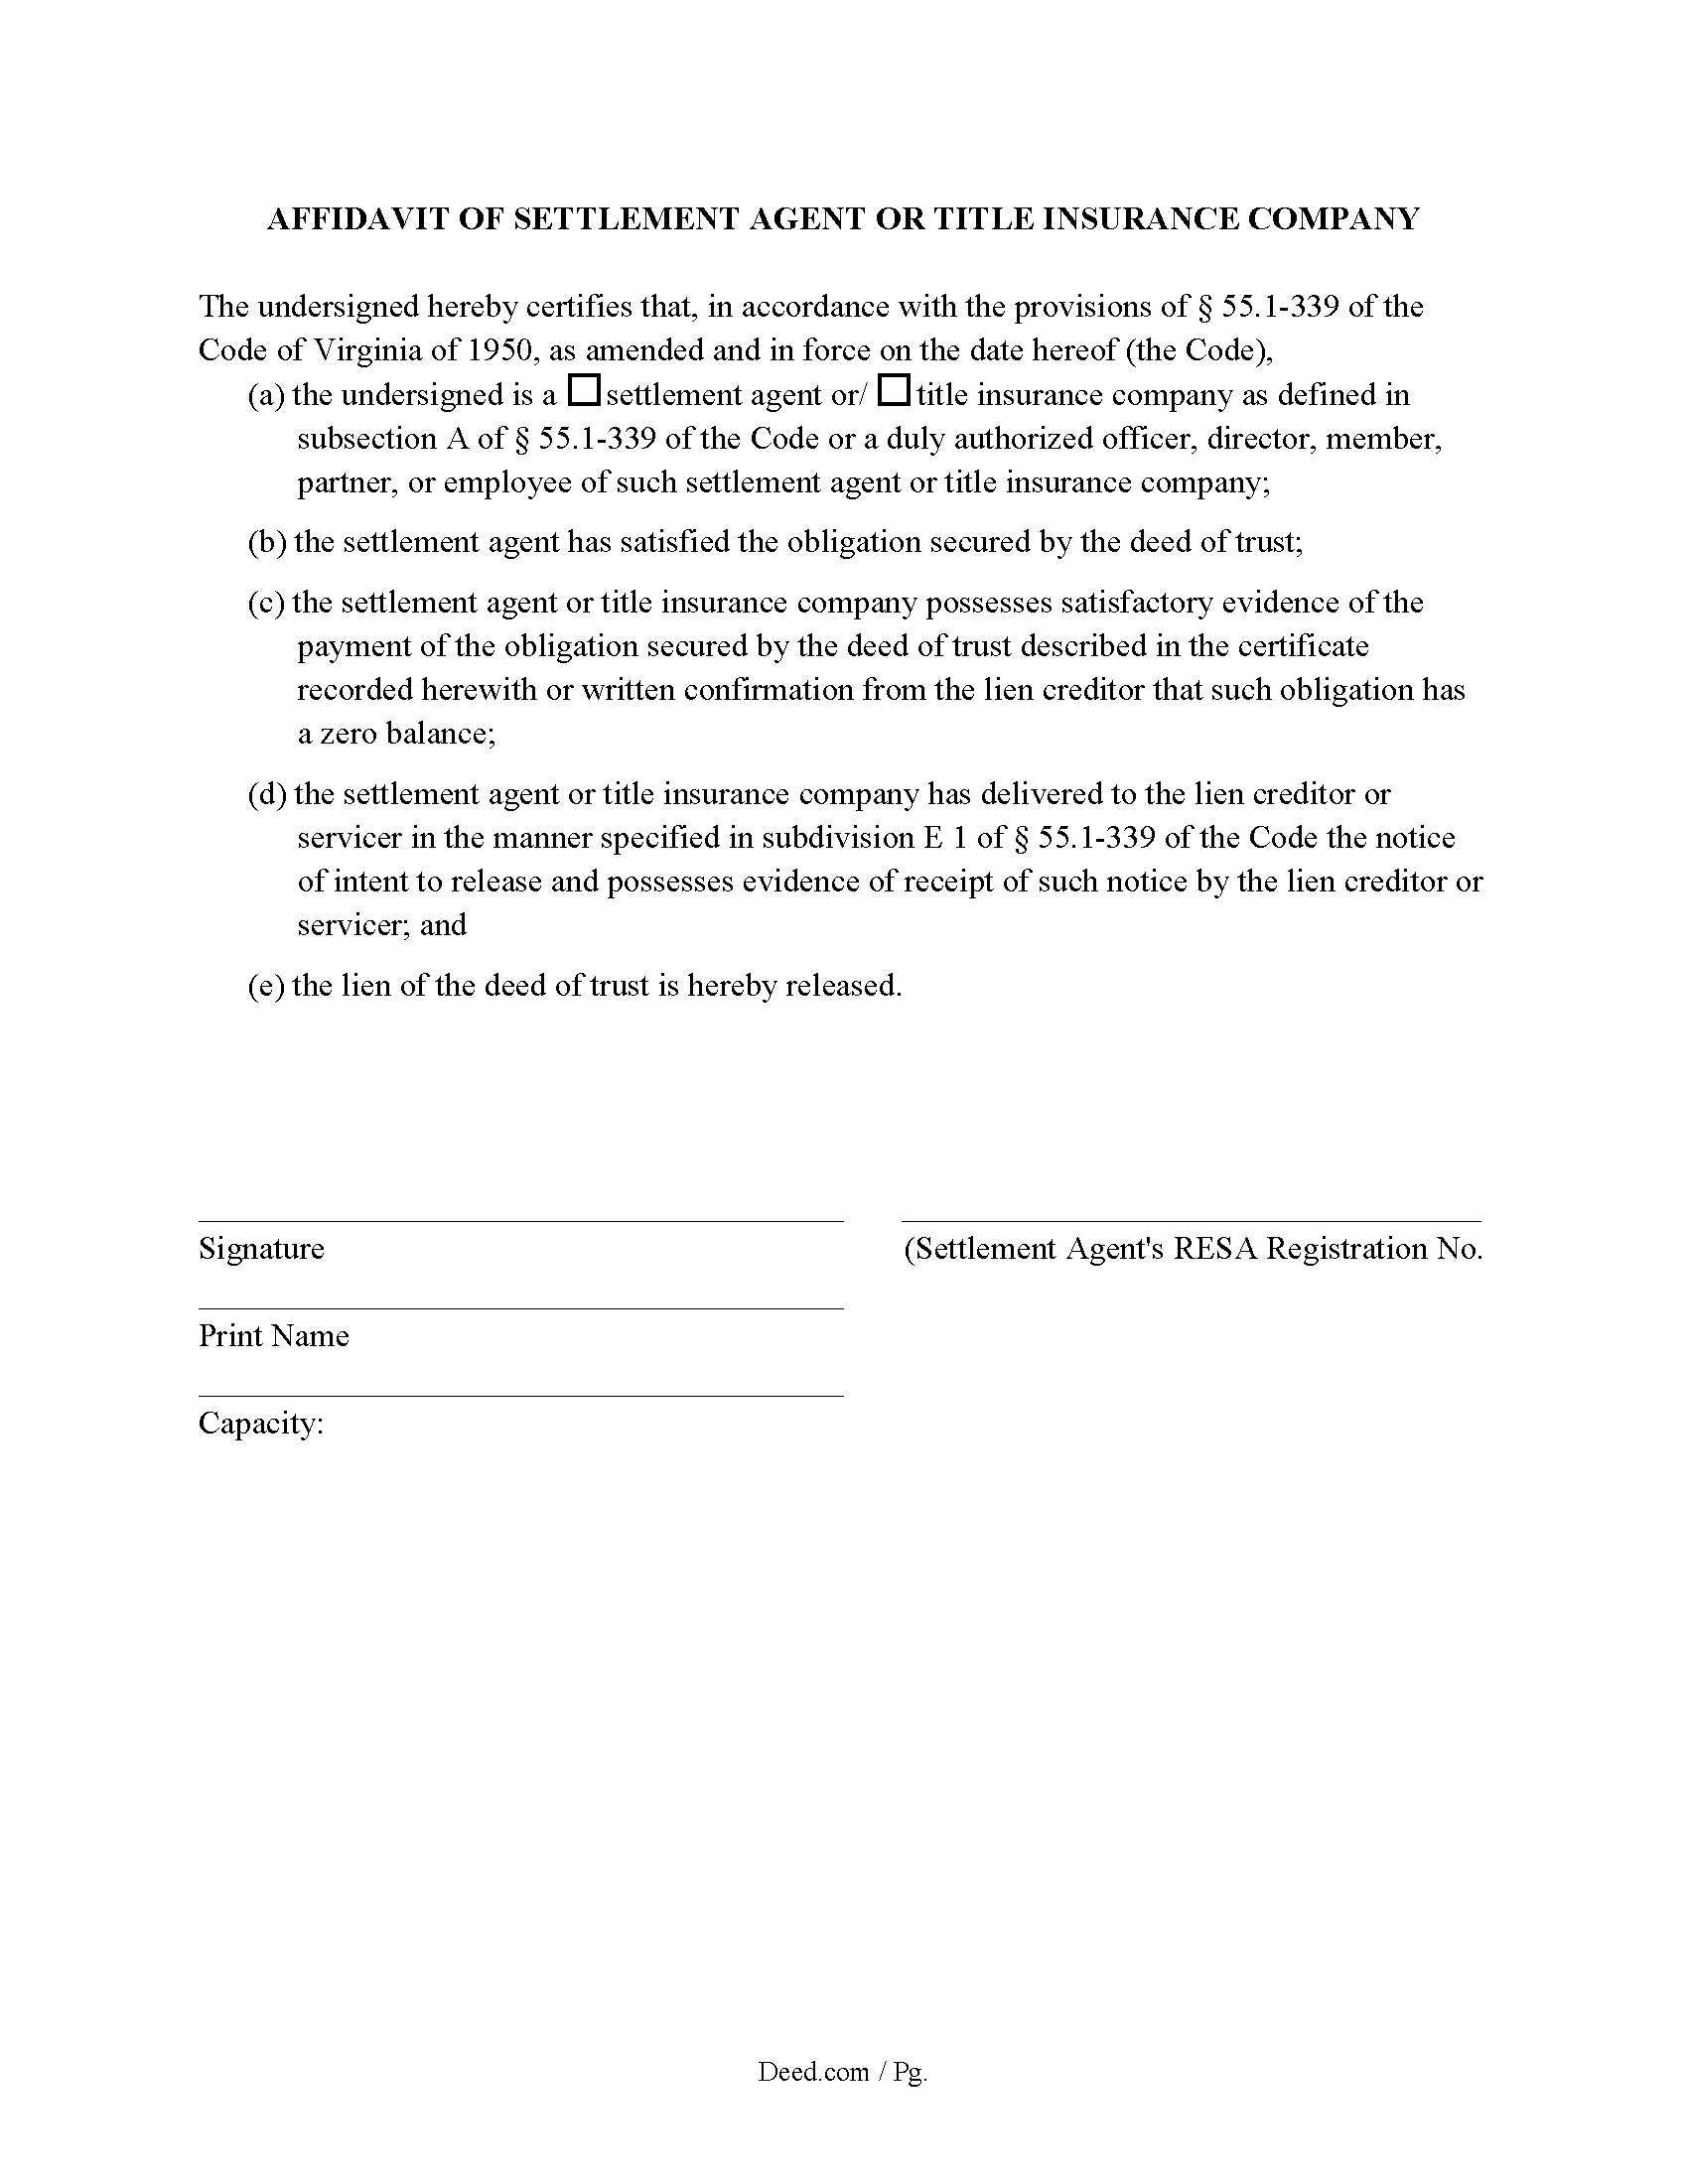 Affidavit of Settlement Agent or Title Insurance Company Form